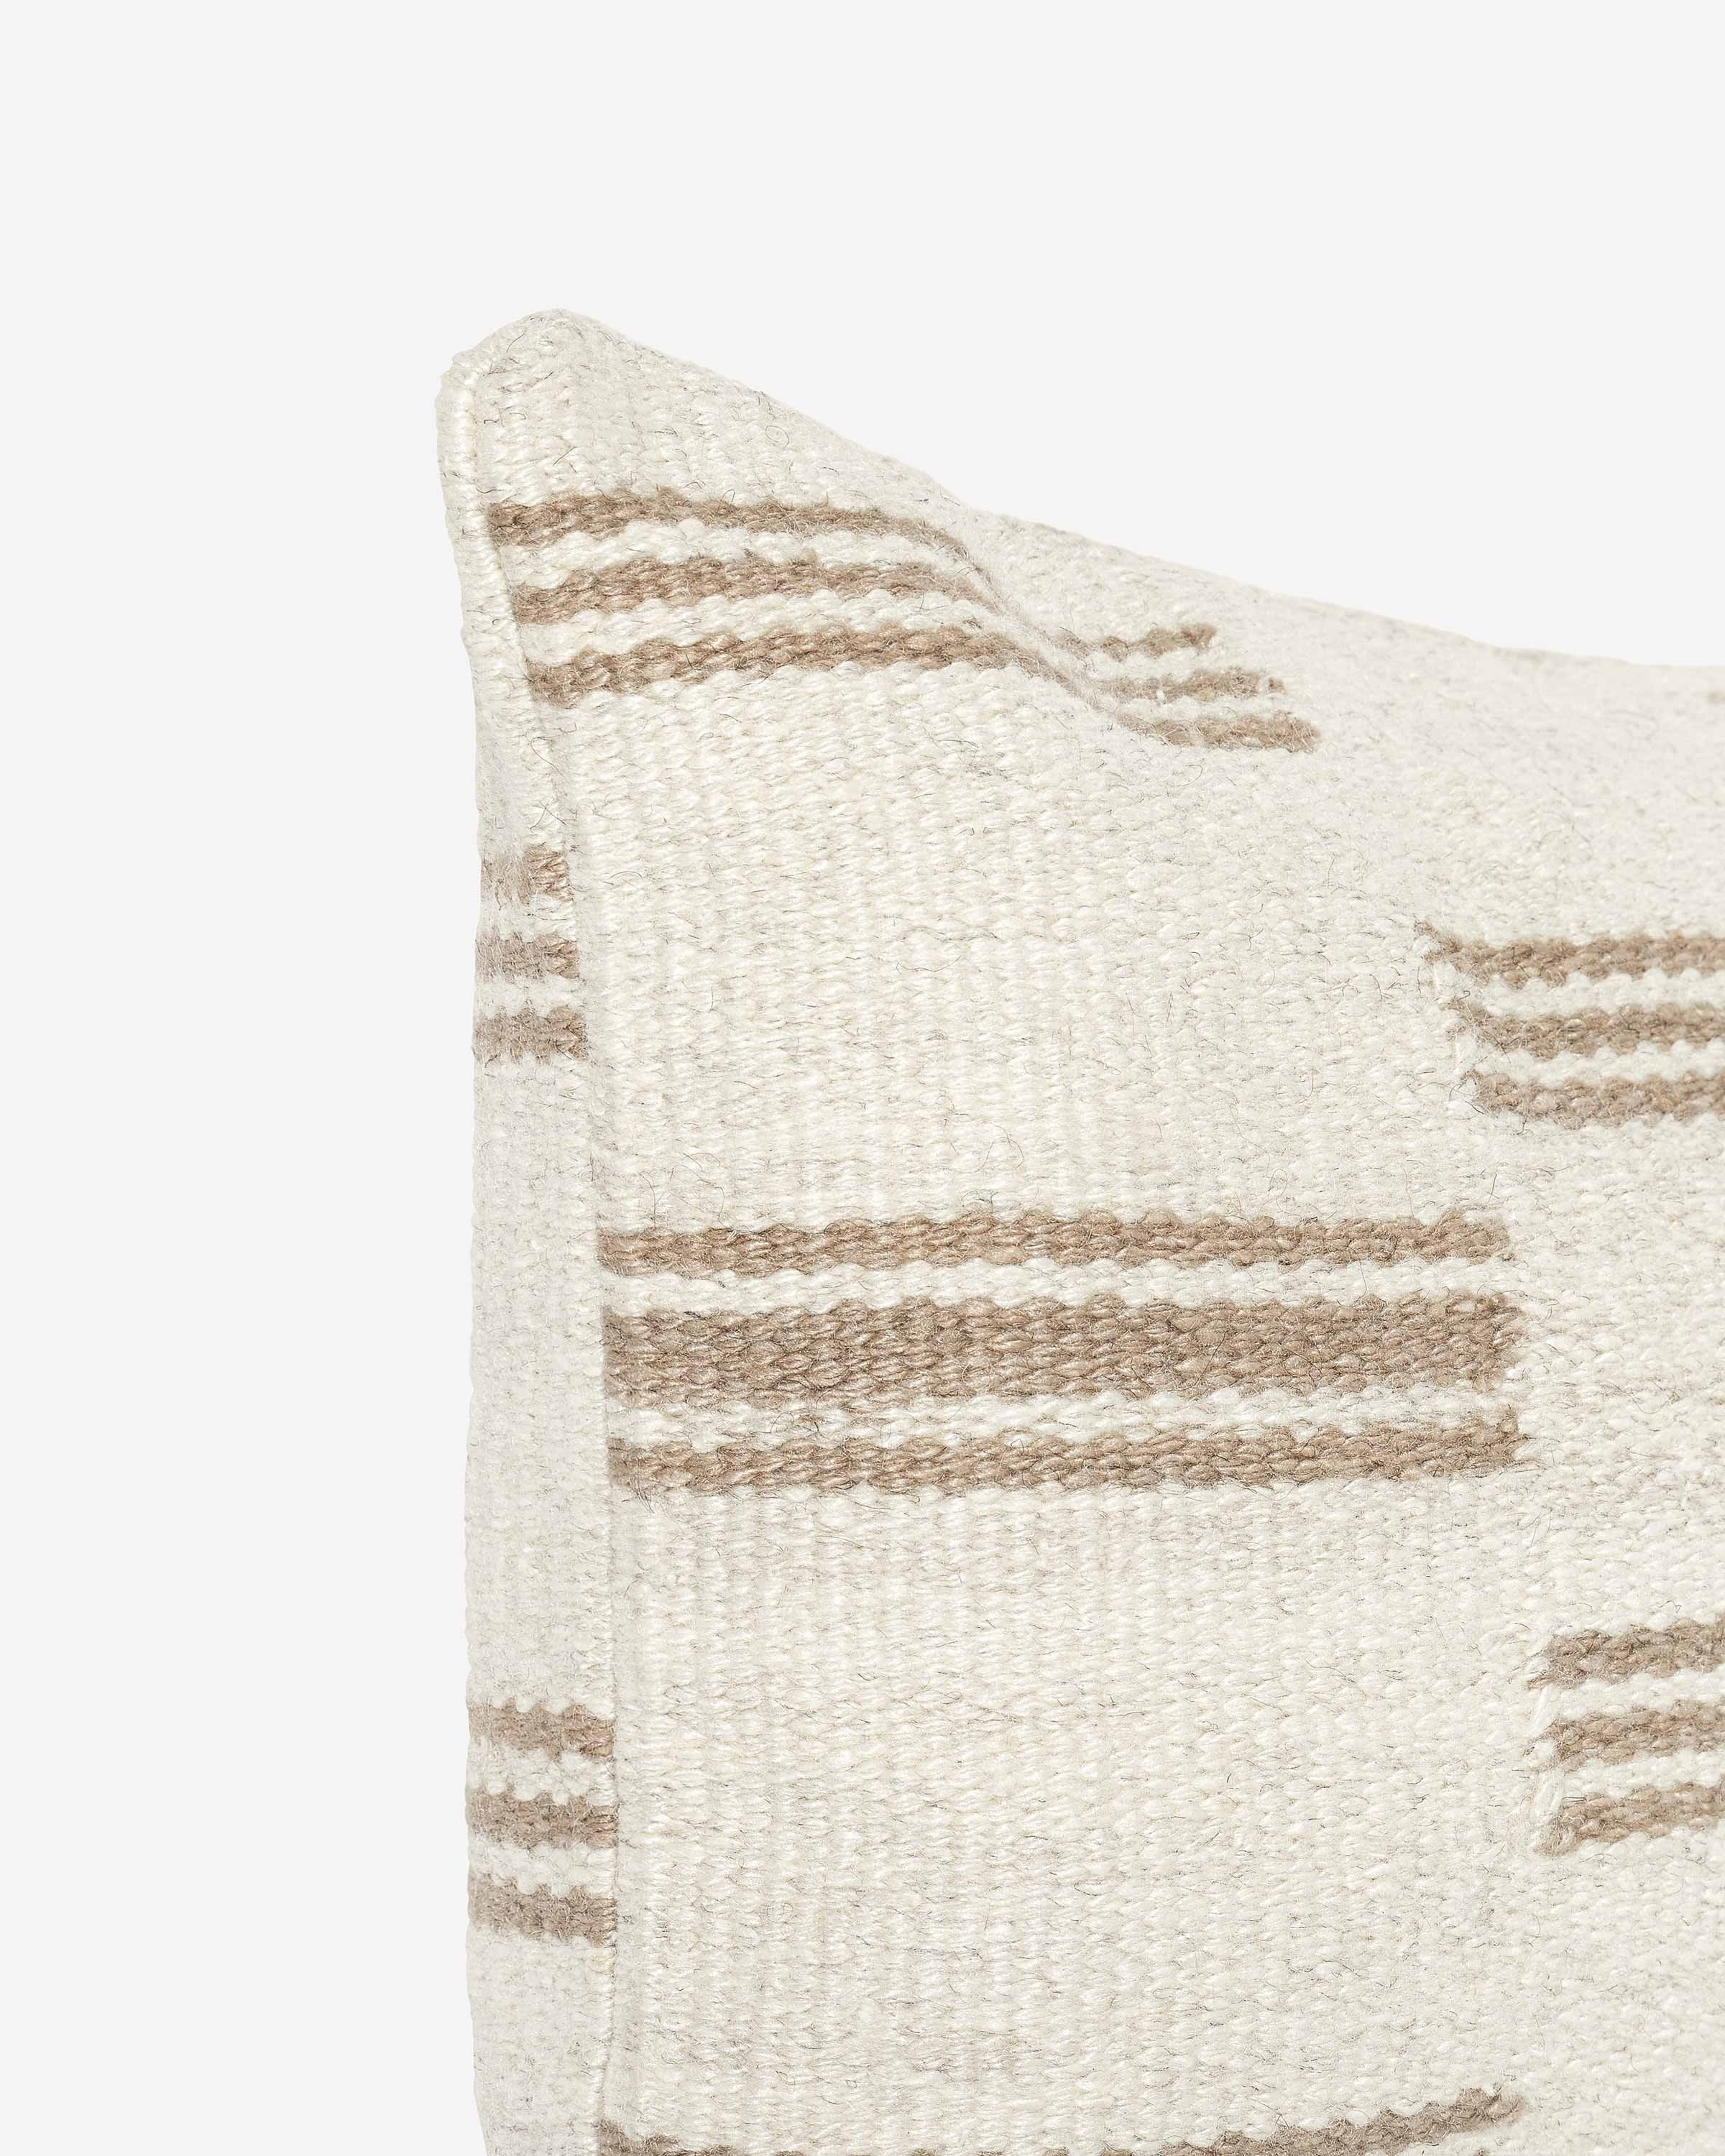 Stripe Break Pillow by Sarah Sherman Samuel - Image 5